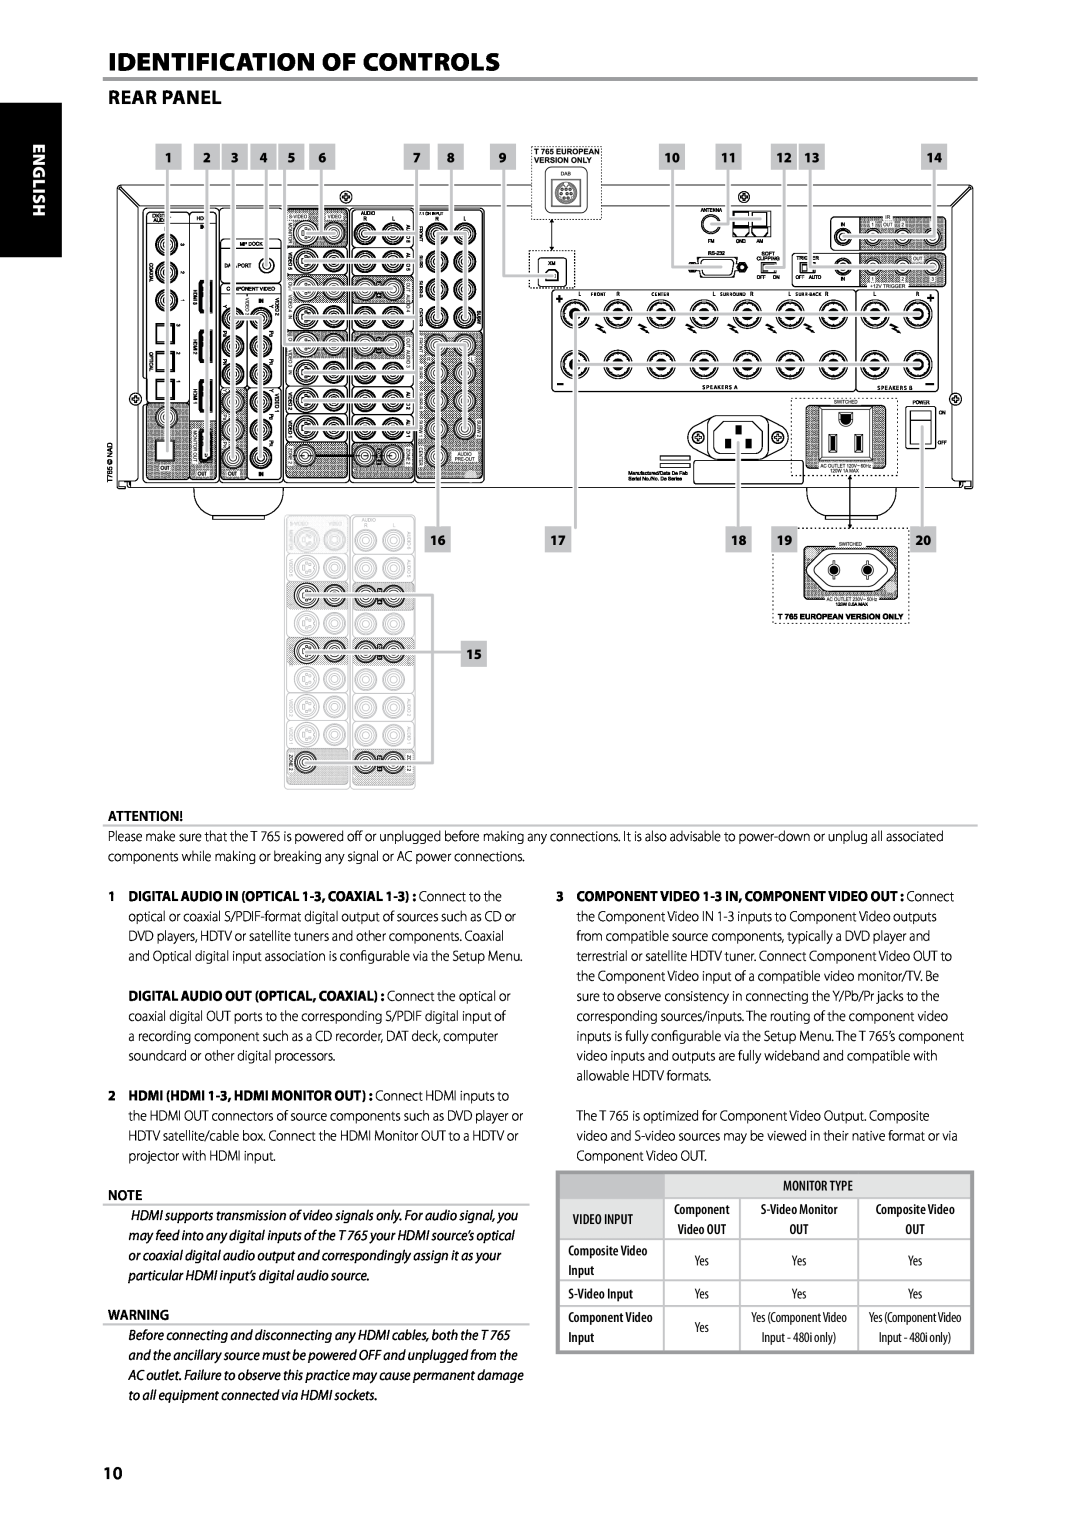 NAD T 765 Rear Panel, Nederlands Svenska Русский, identification of controls, English Français Español Italiano, Deutsch 